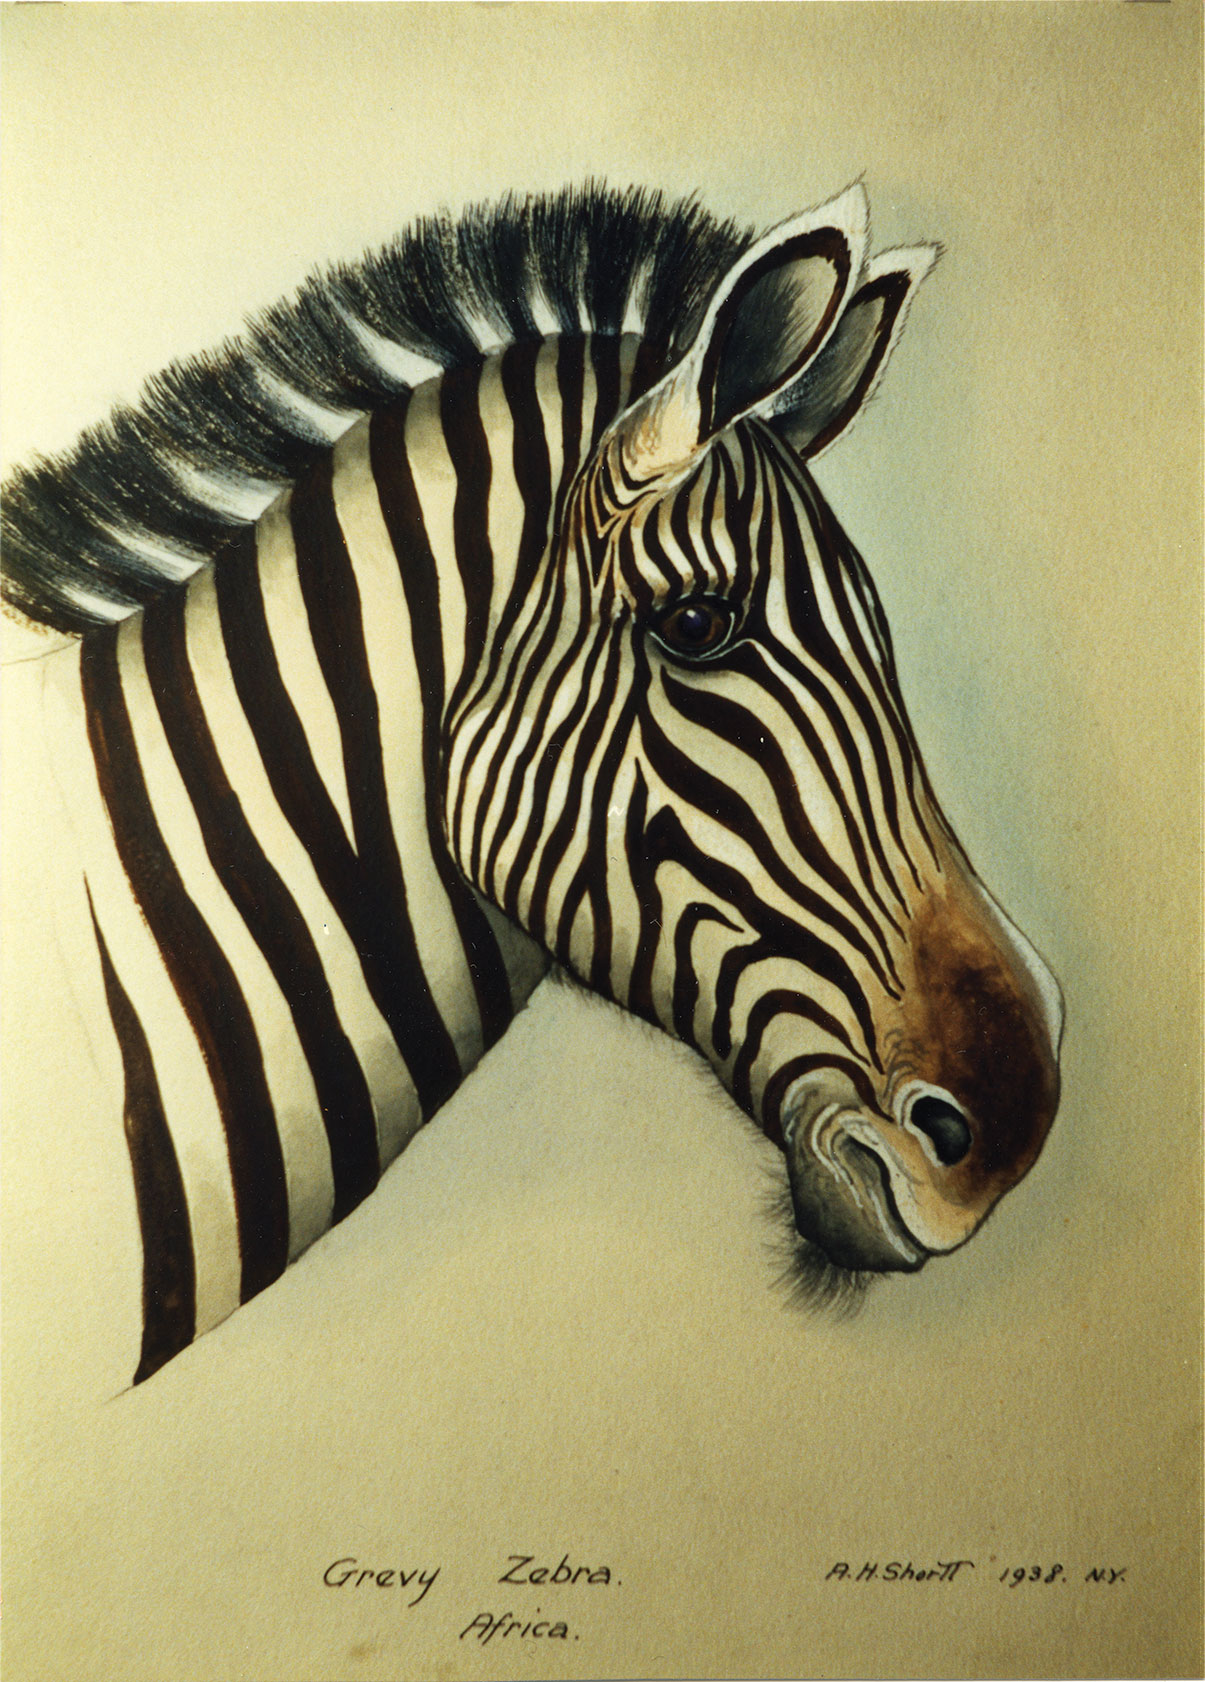 An illustration of a zebra.